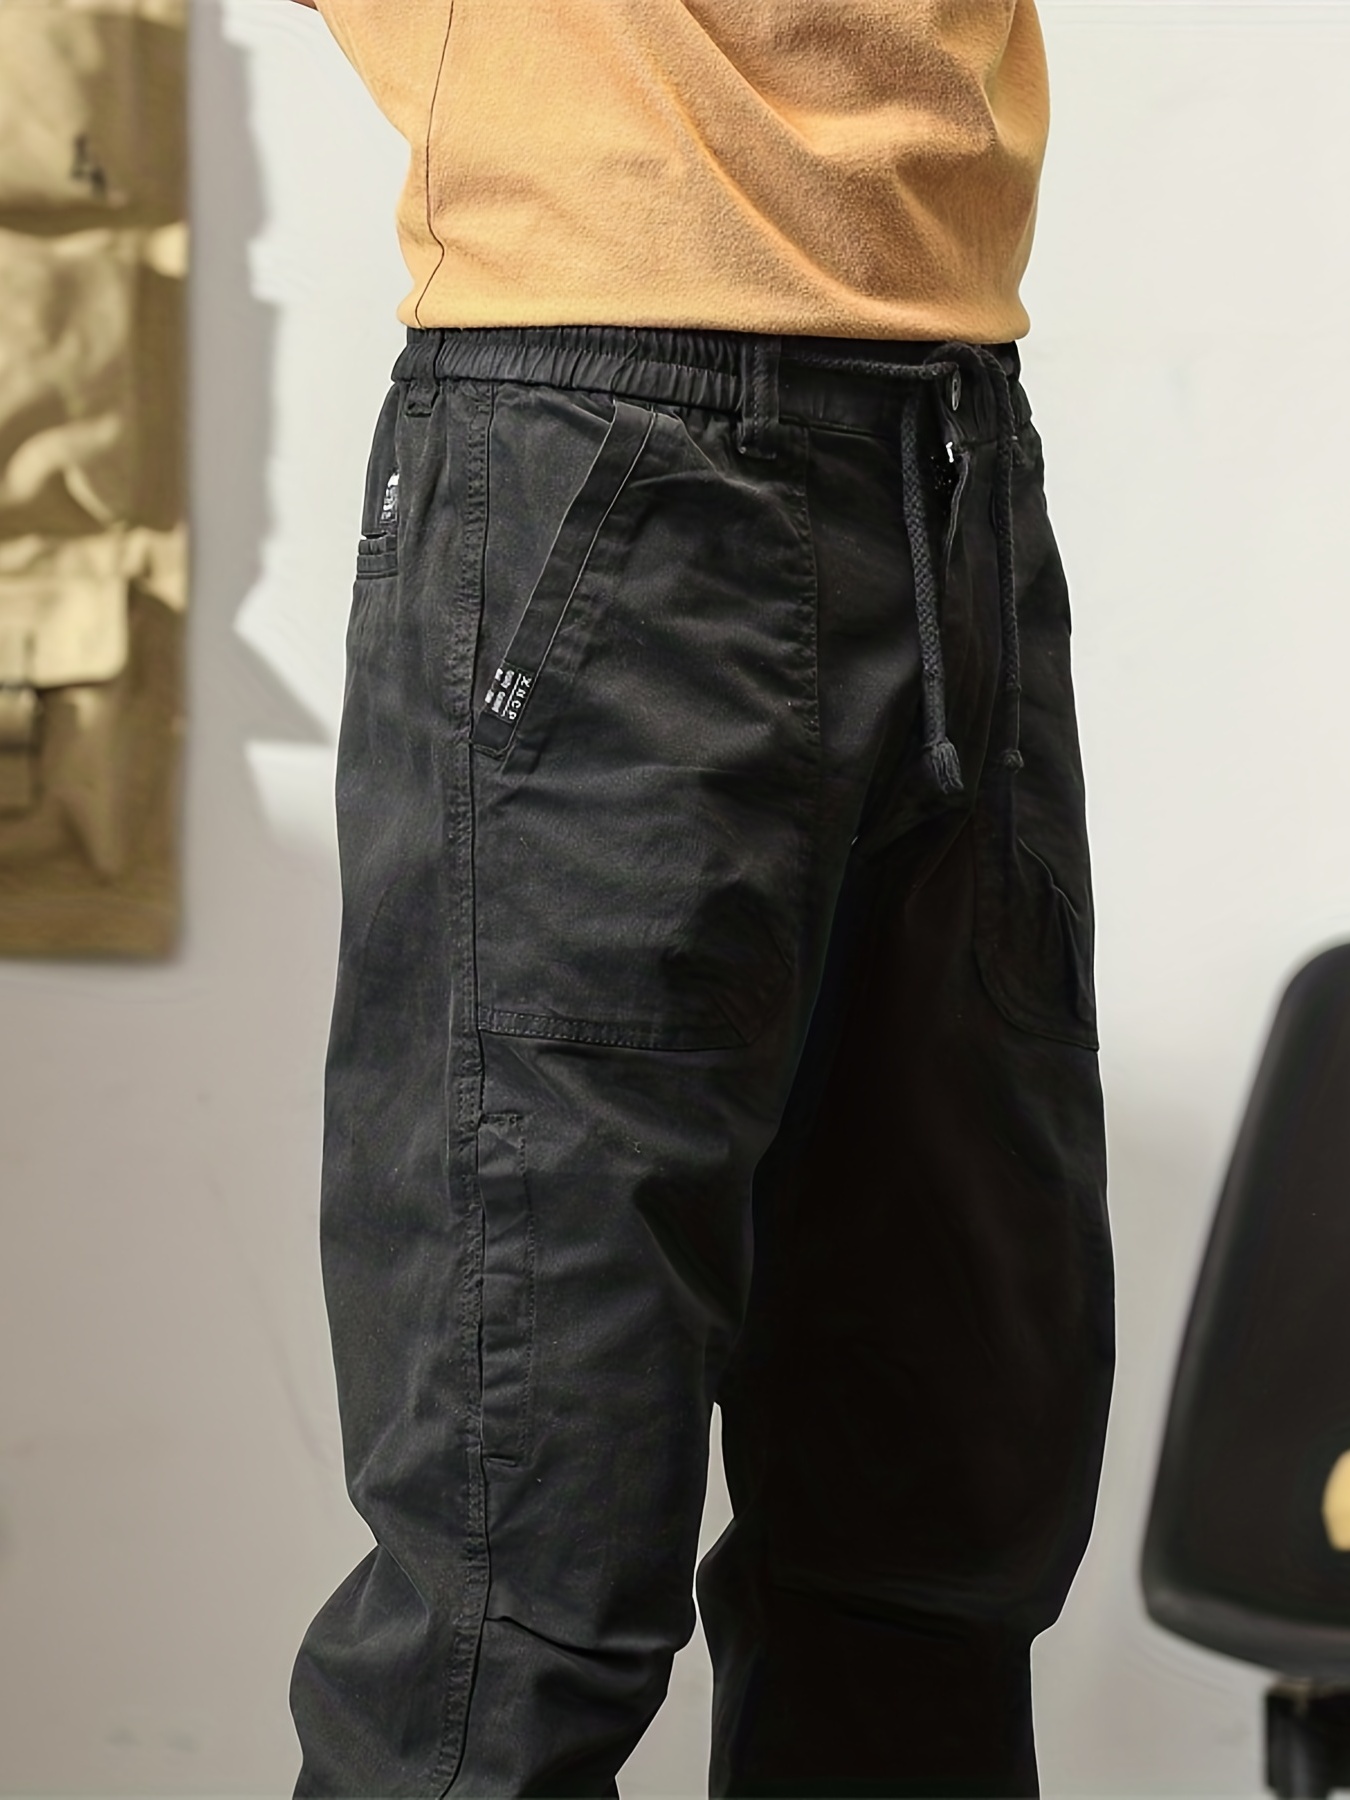 Pantaloni Cargo Jogger Vari Colori  Mens pants casual, Casual jogging  pants, Jogger pants casual